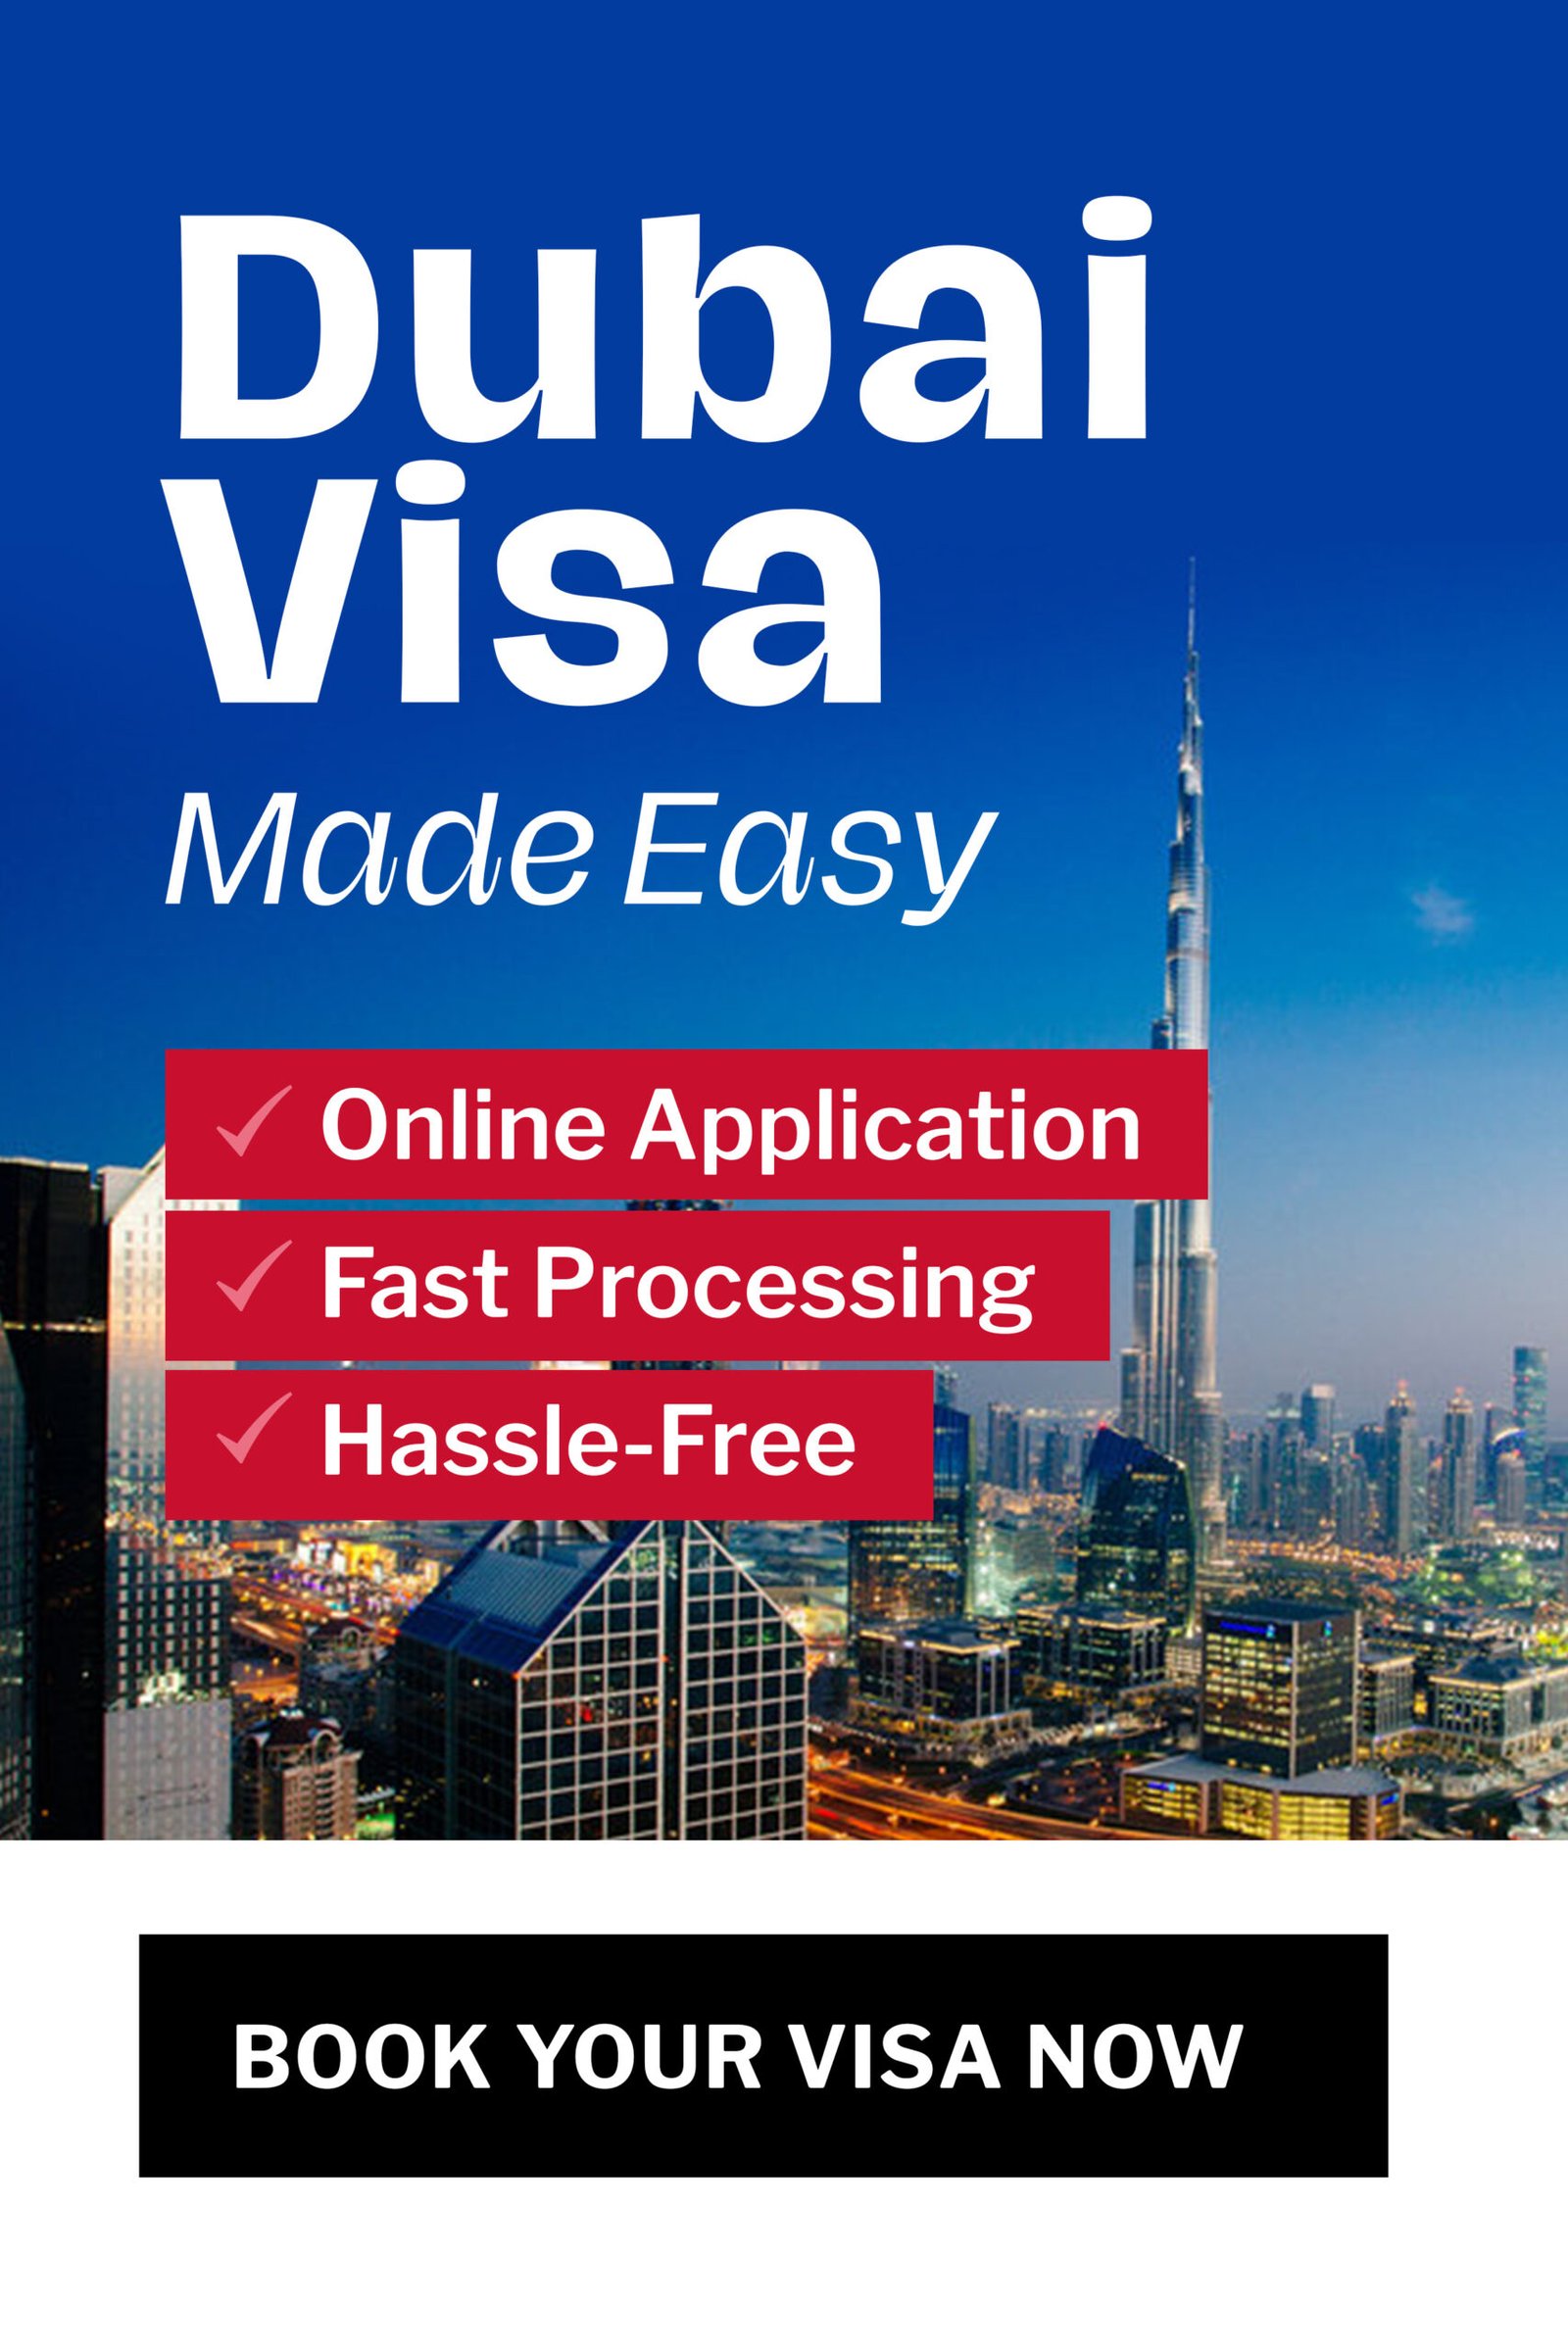 Dubai Visa side banners 2